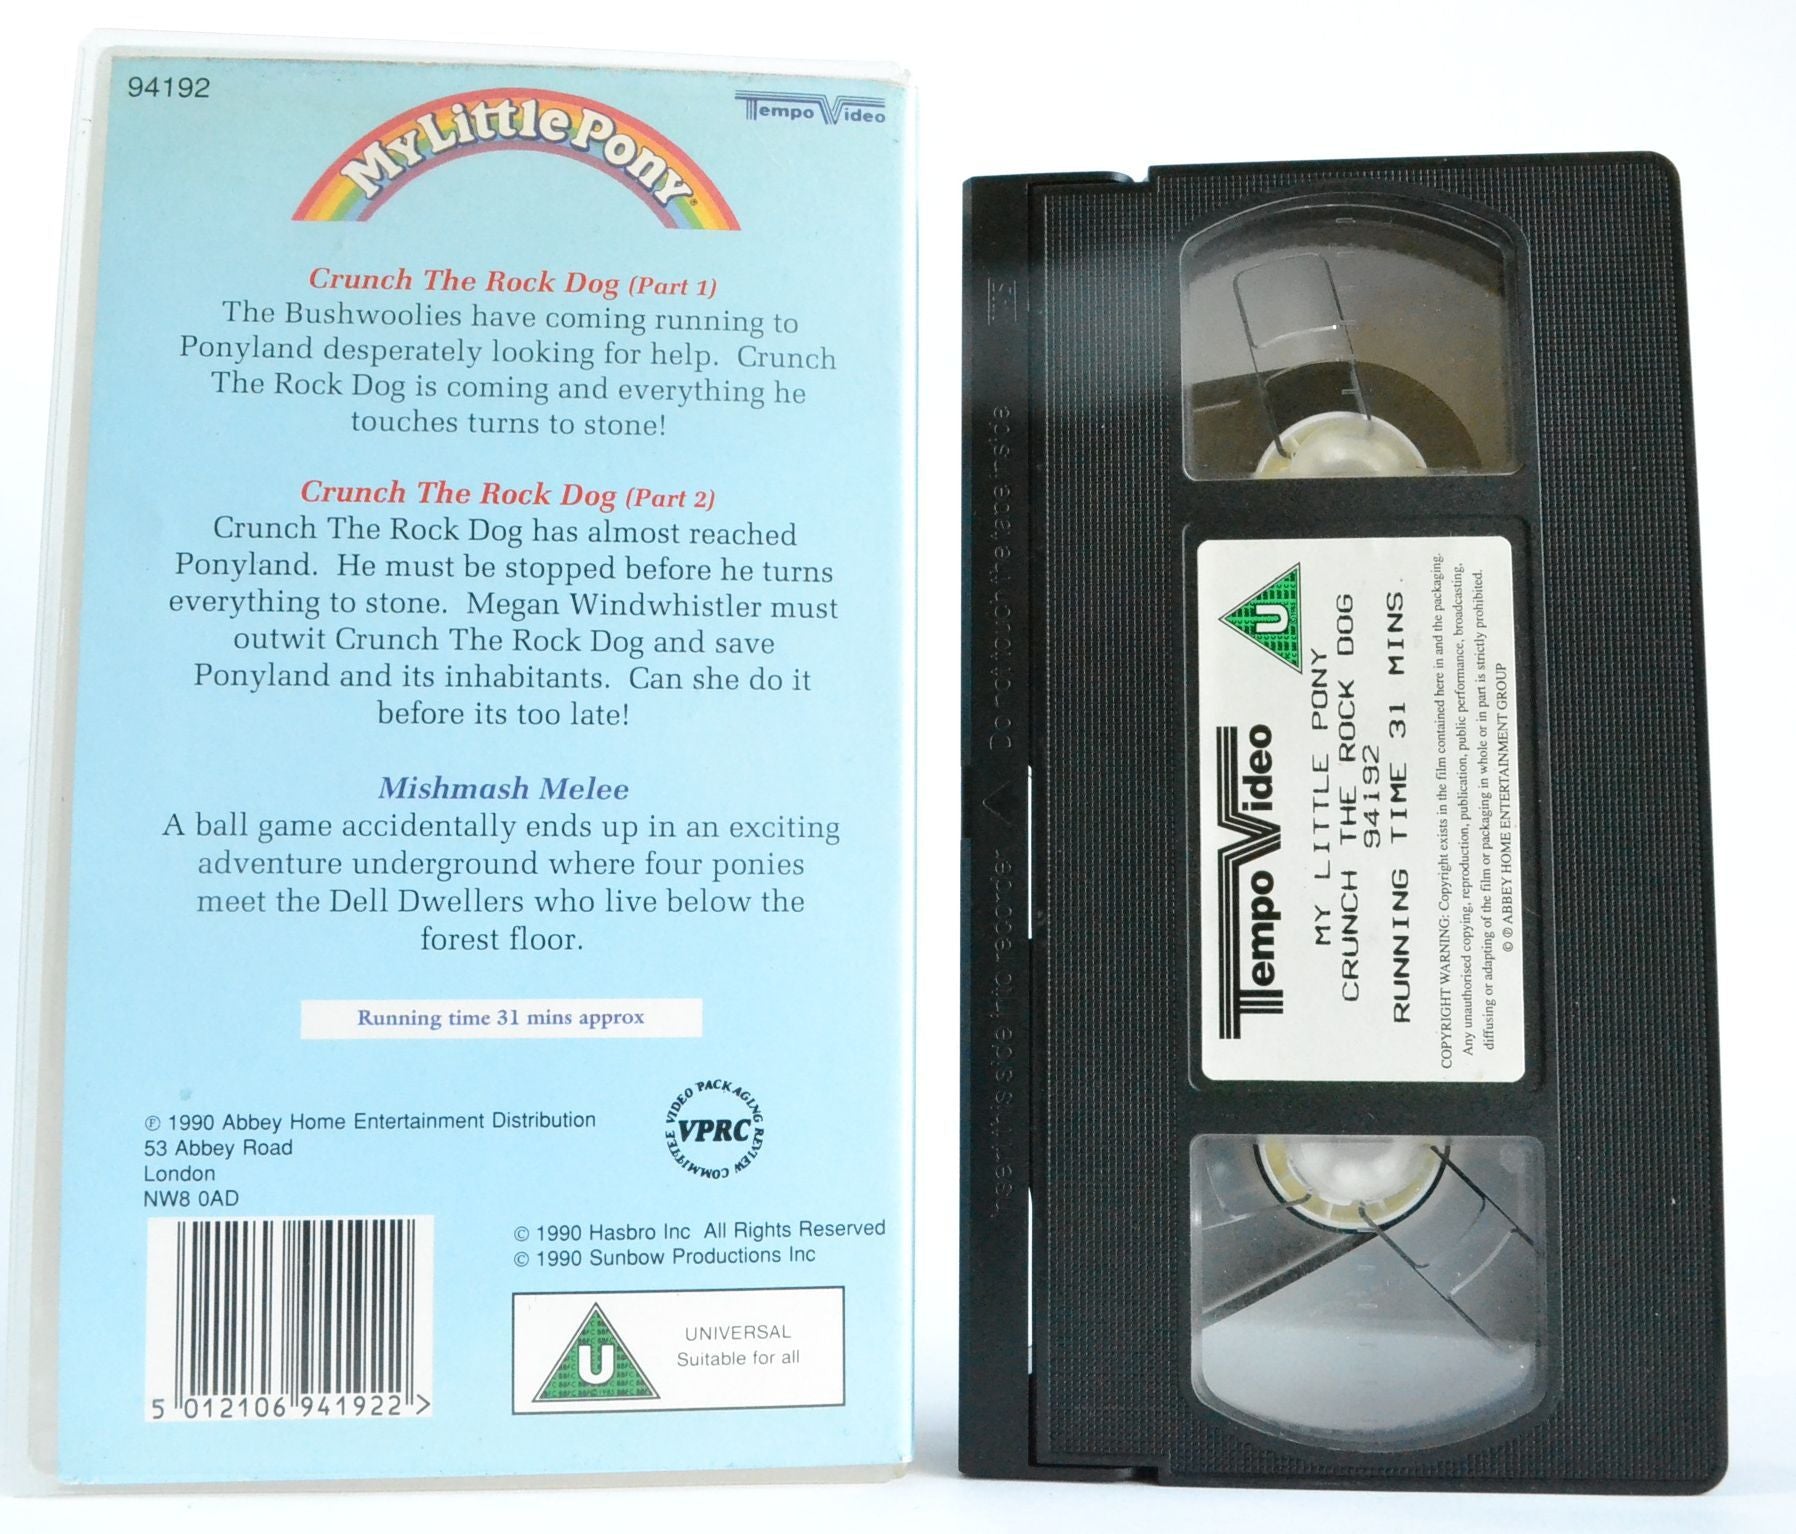 My Little Pony: Crunch The Rock Dog [Mishmash Melee] Hasbro Kids (1990) VHS-